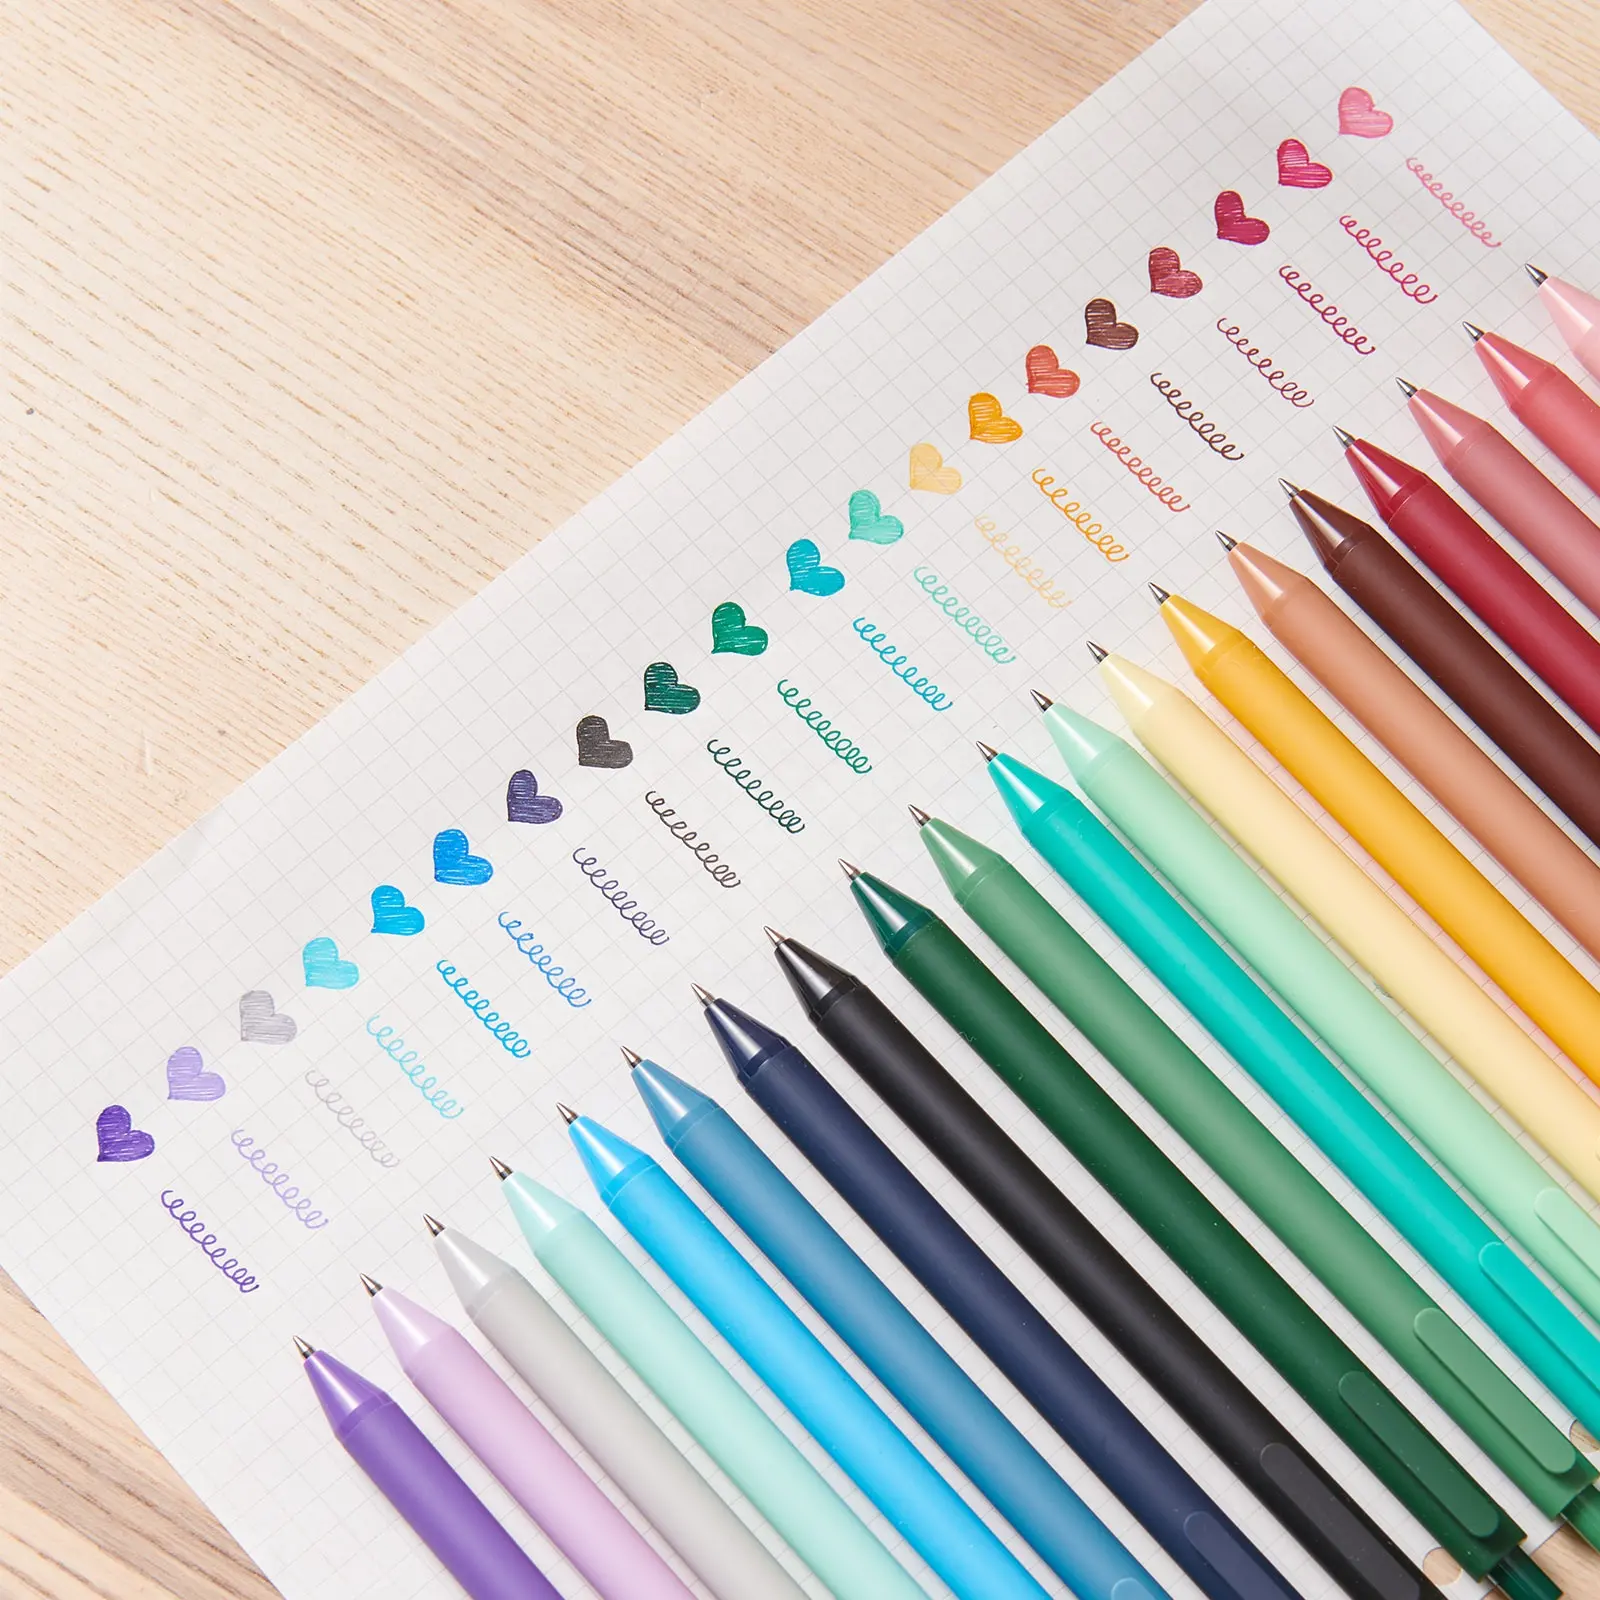 KACO bolpoin murni pena desain asli 43 multi-warna 1.0mm pulpen bolpoin promosi alat tulis lucu Sup kantor sekolah